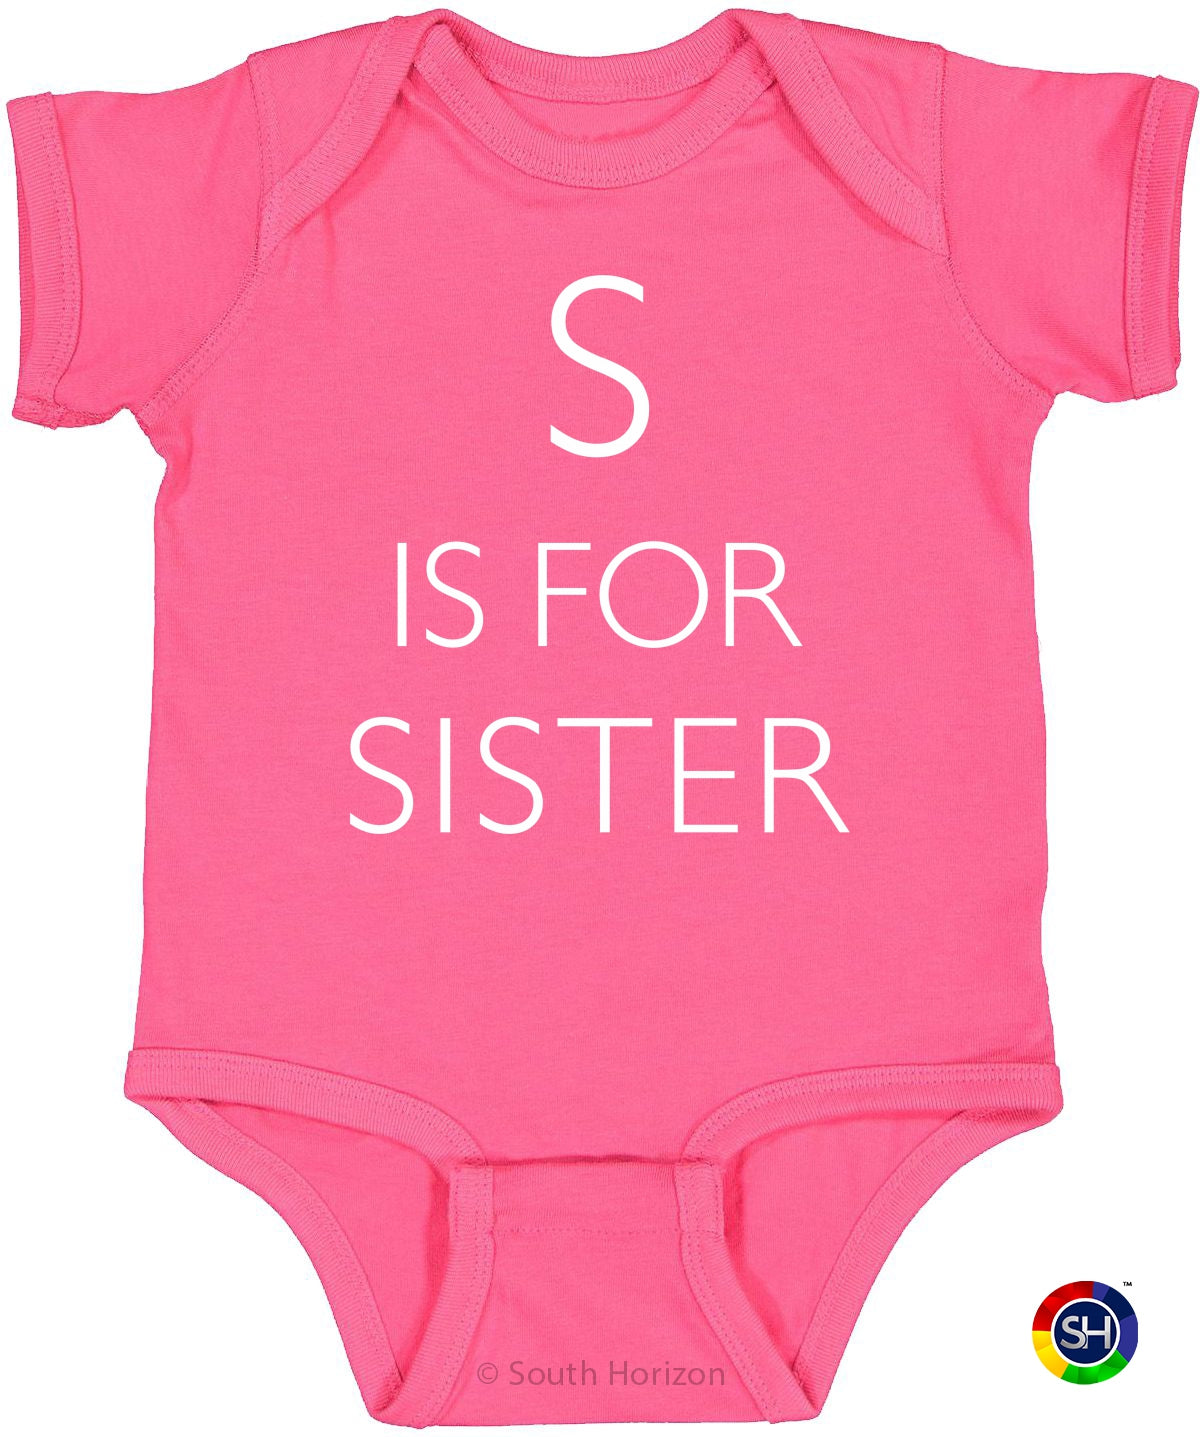 S is for Sister Infant BodySuit (#1159-10)